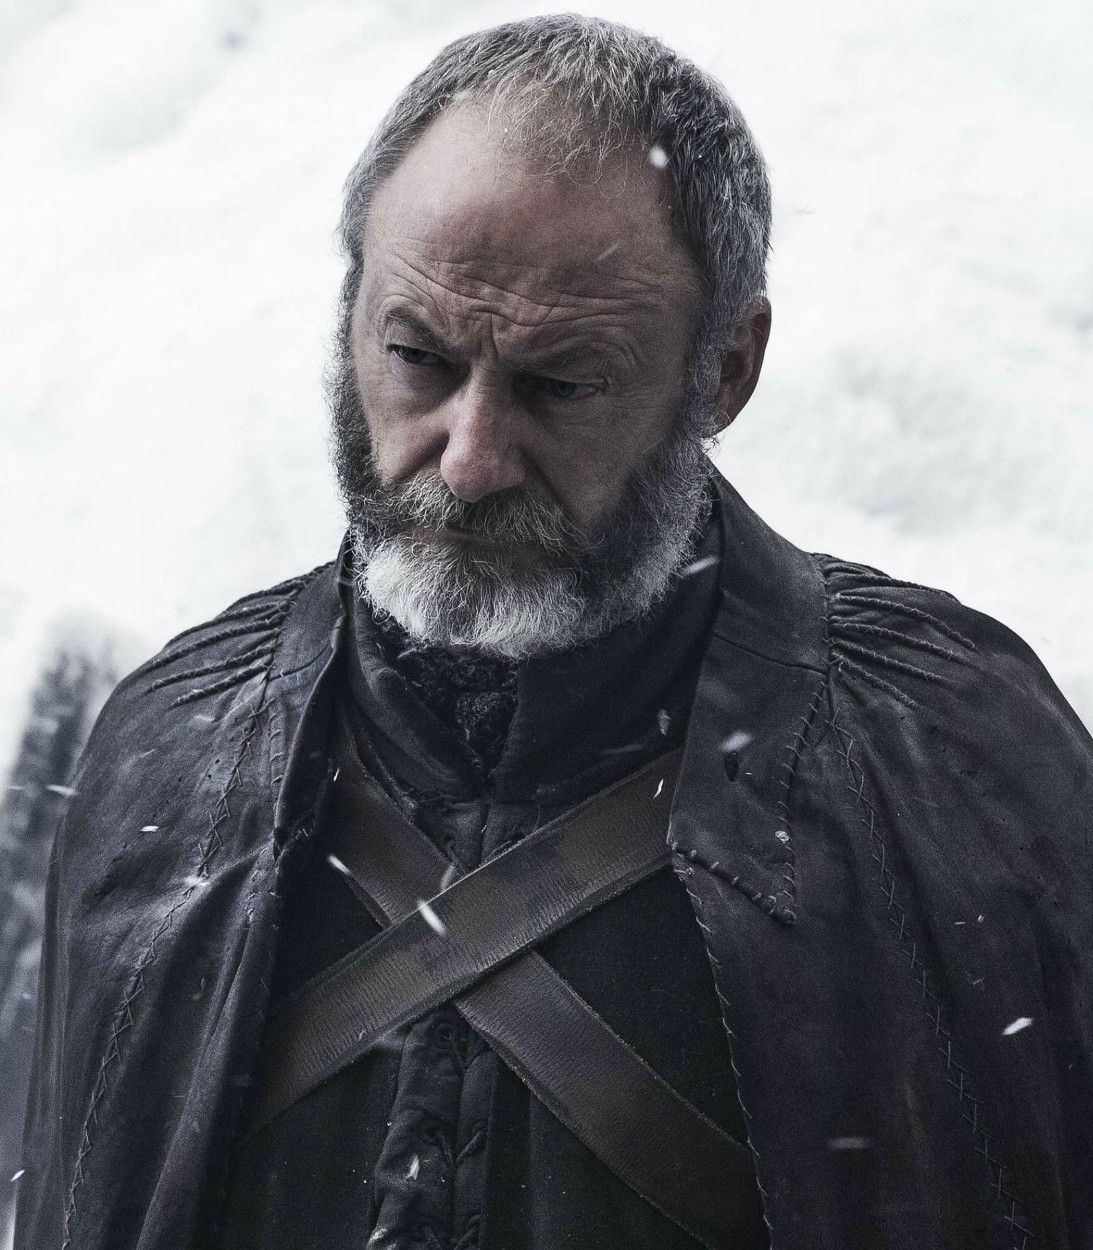 Liam Cunningham As Davos Seaworth In Game Of Thrones